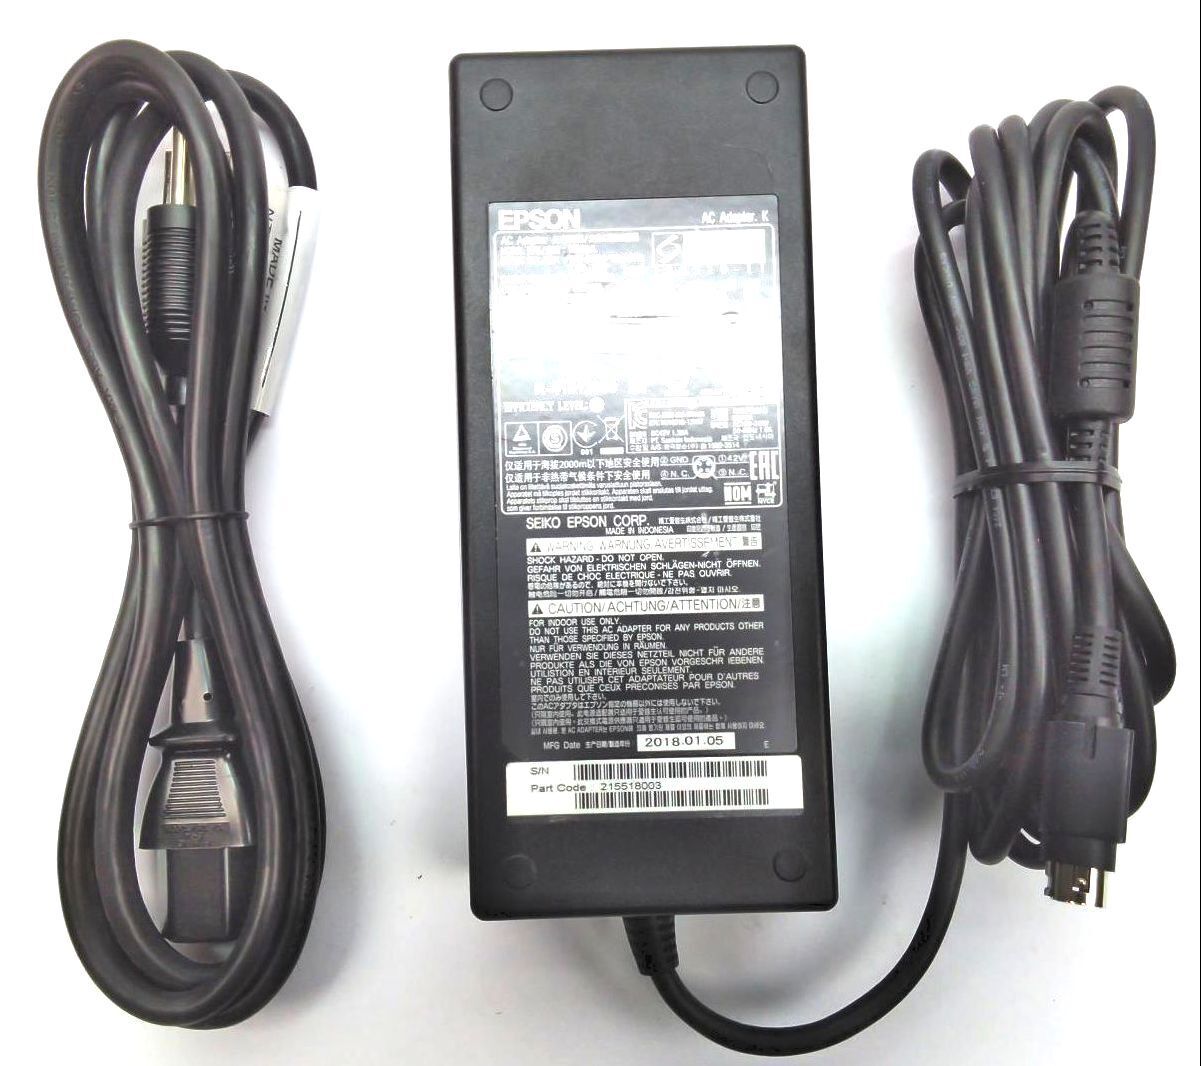 Genuine Epson AC Adapter for ColorWorks C3500 Printer 58W 42V 1.38A M248A OEM